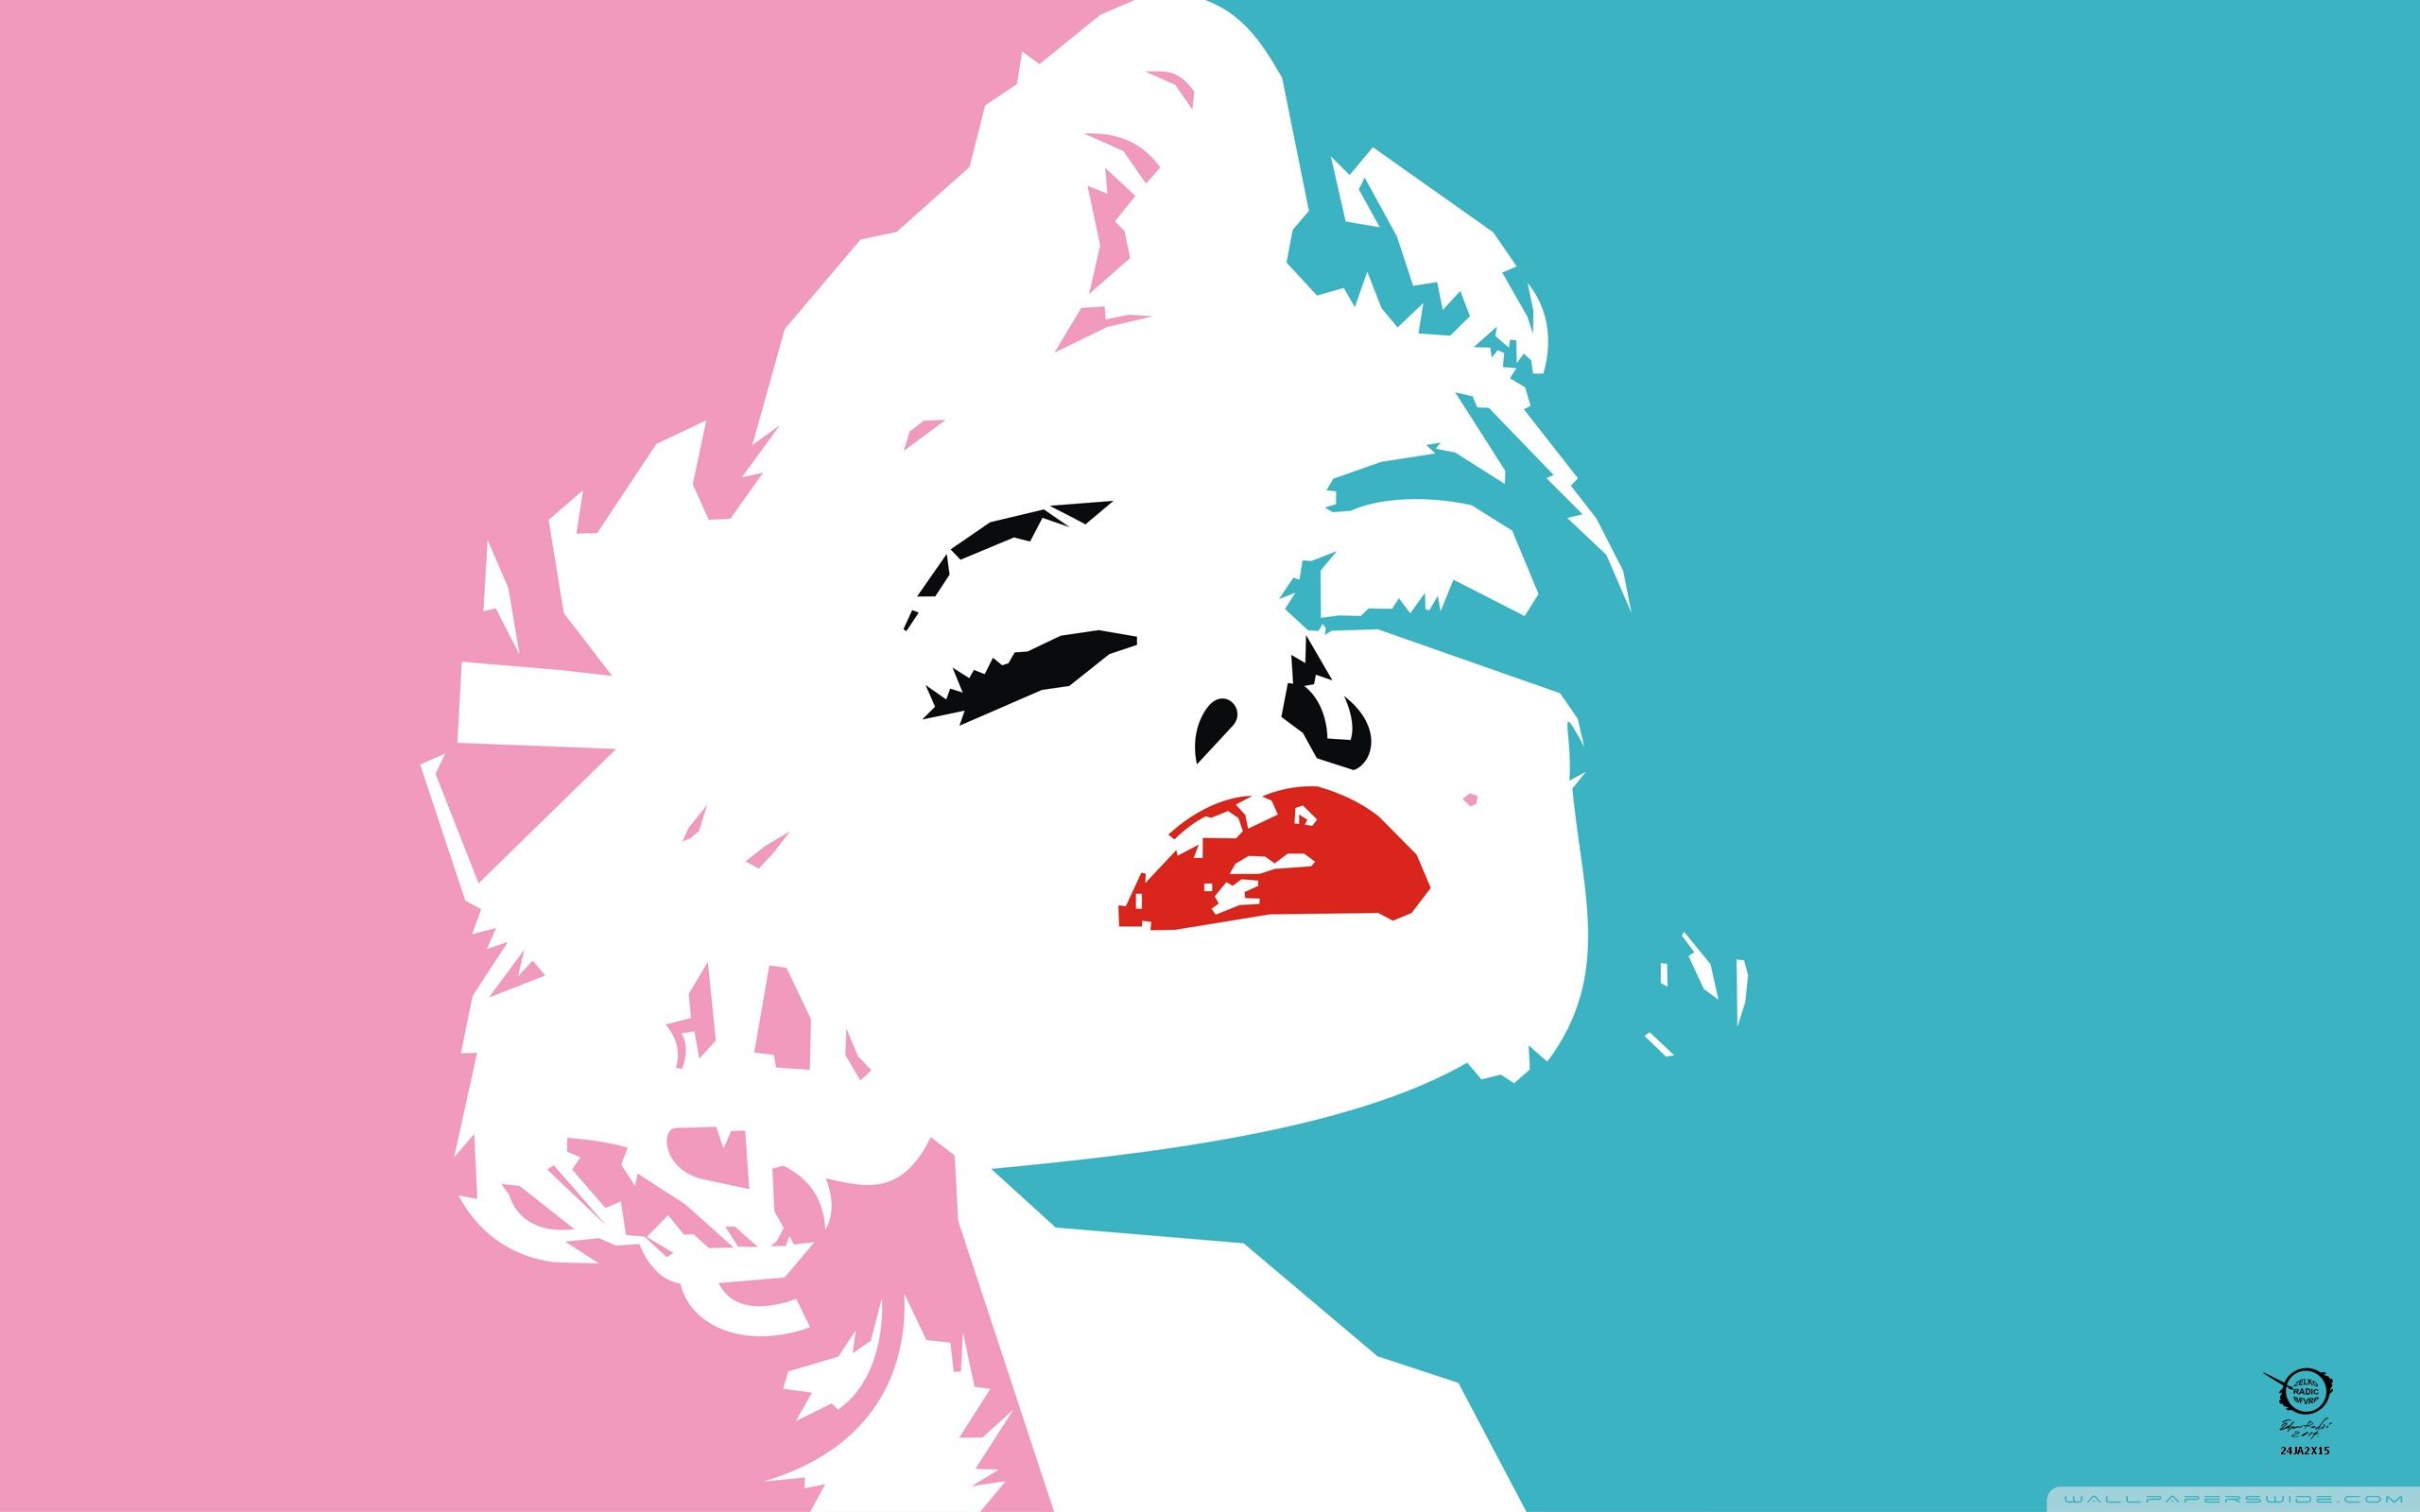 Marilyn Monroe Wallpaper 1080p. Pop art wallpaper